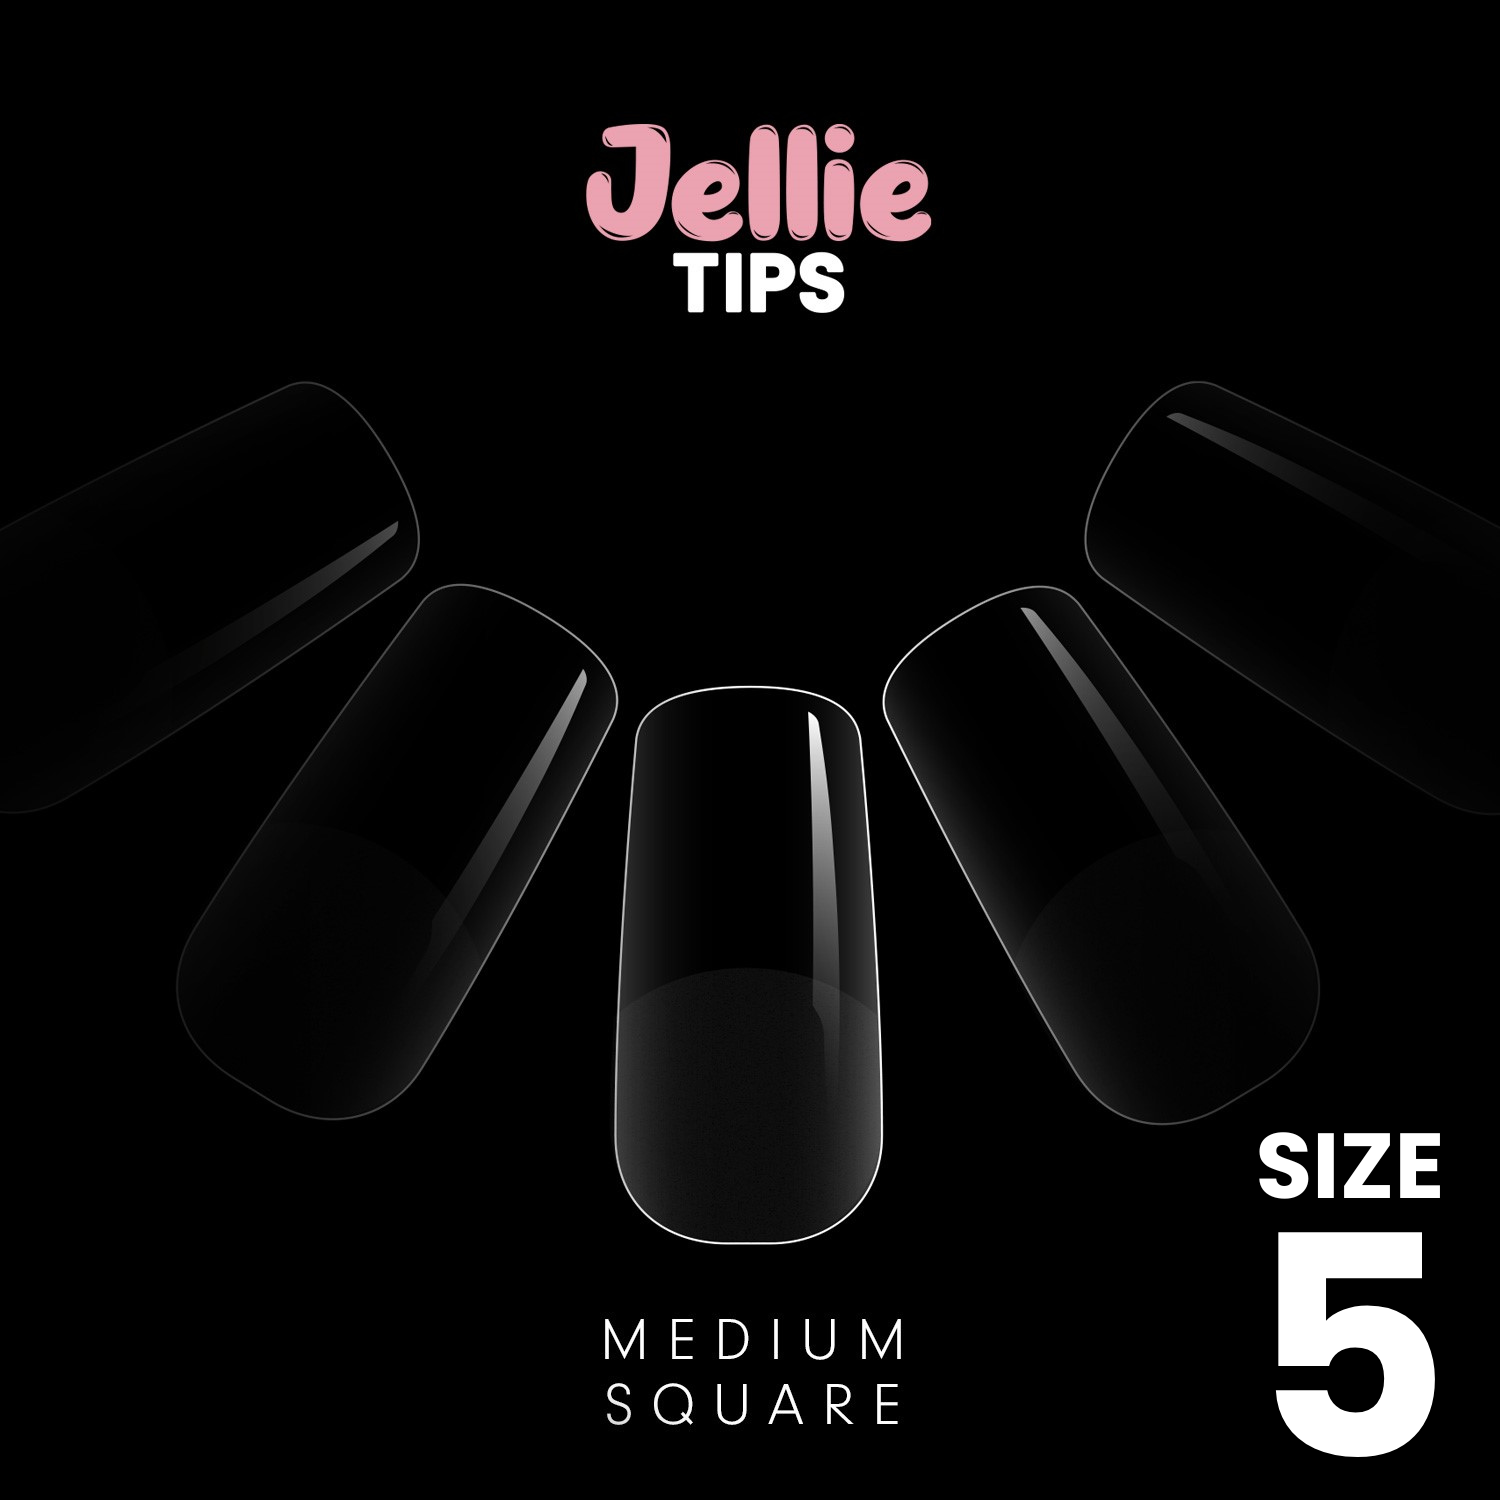 Halo Jellie Nail Tips Medium Square